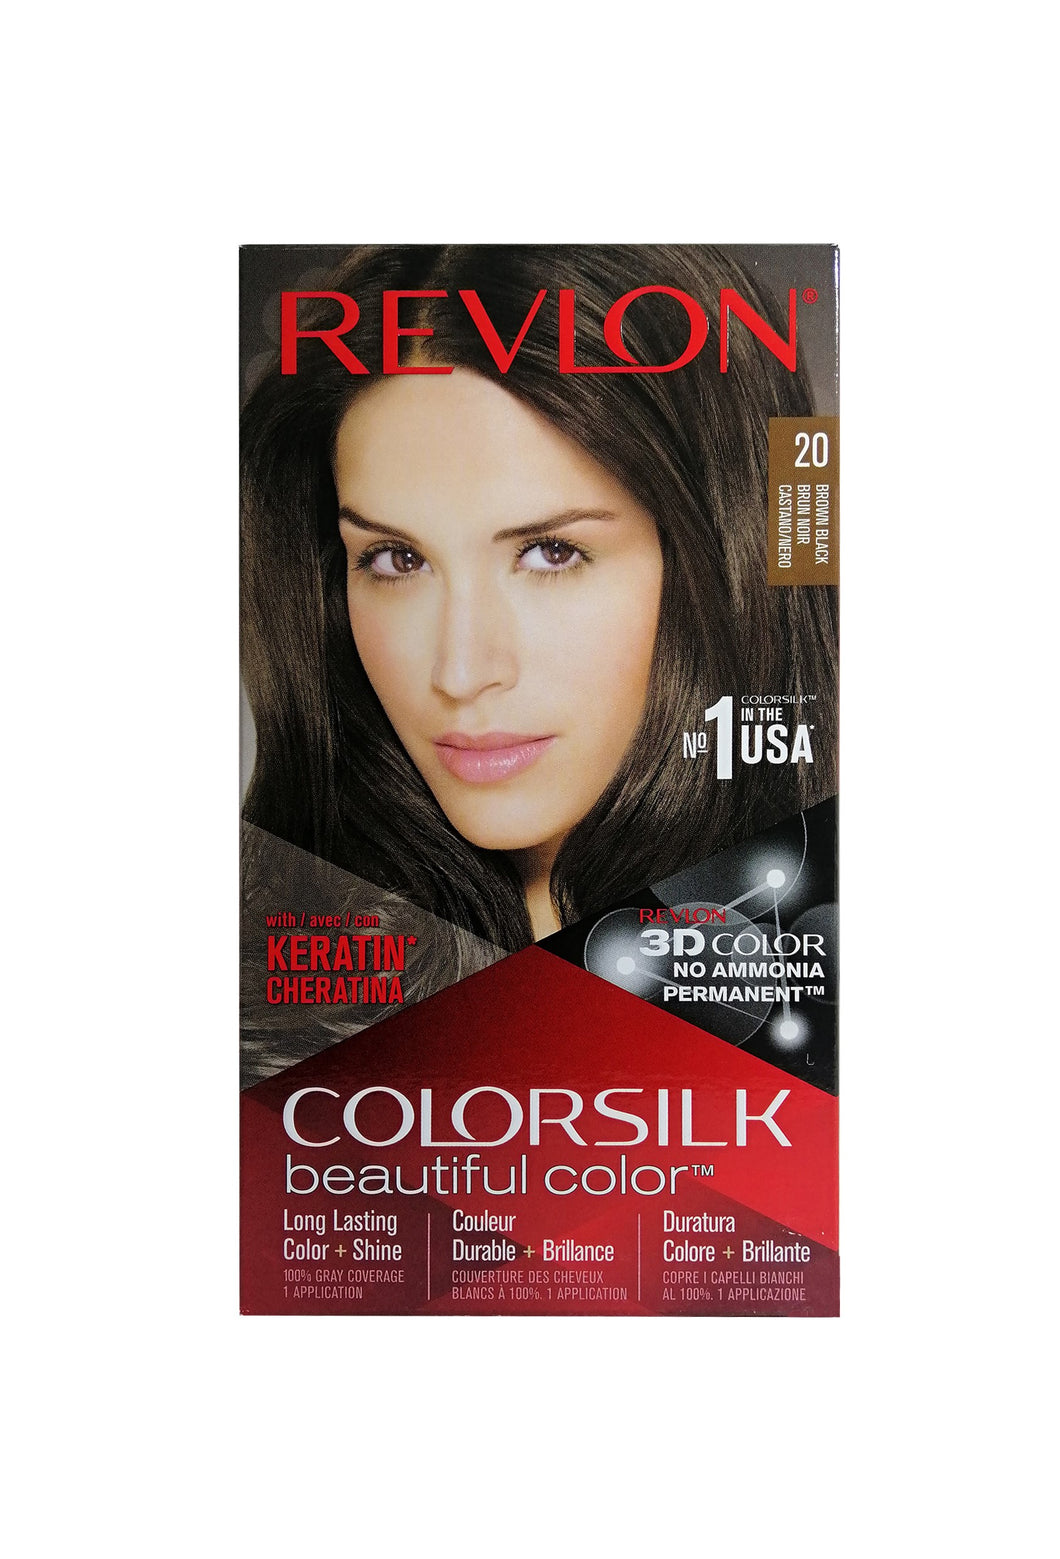 Revlon Colorsilk Beautiful Color - #20 Brown Black